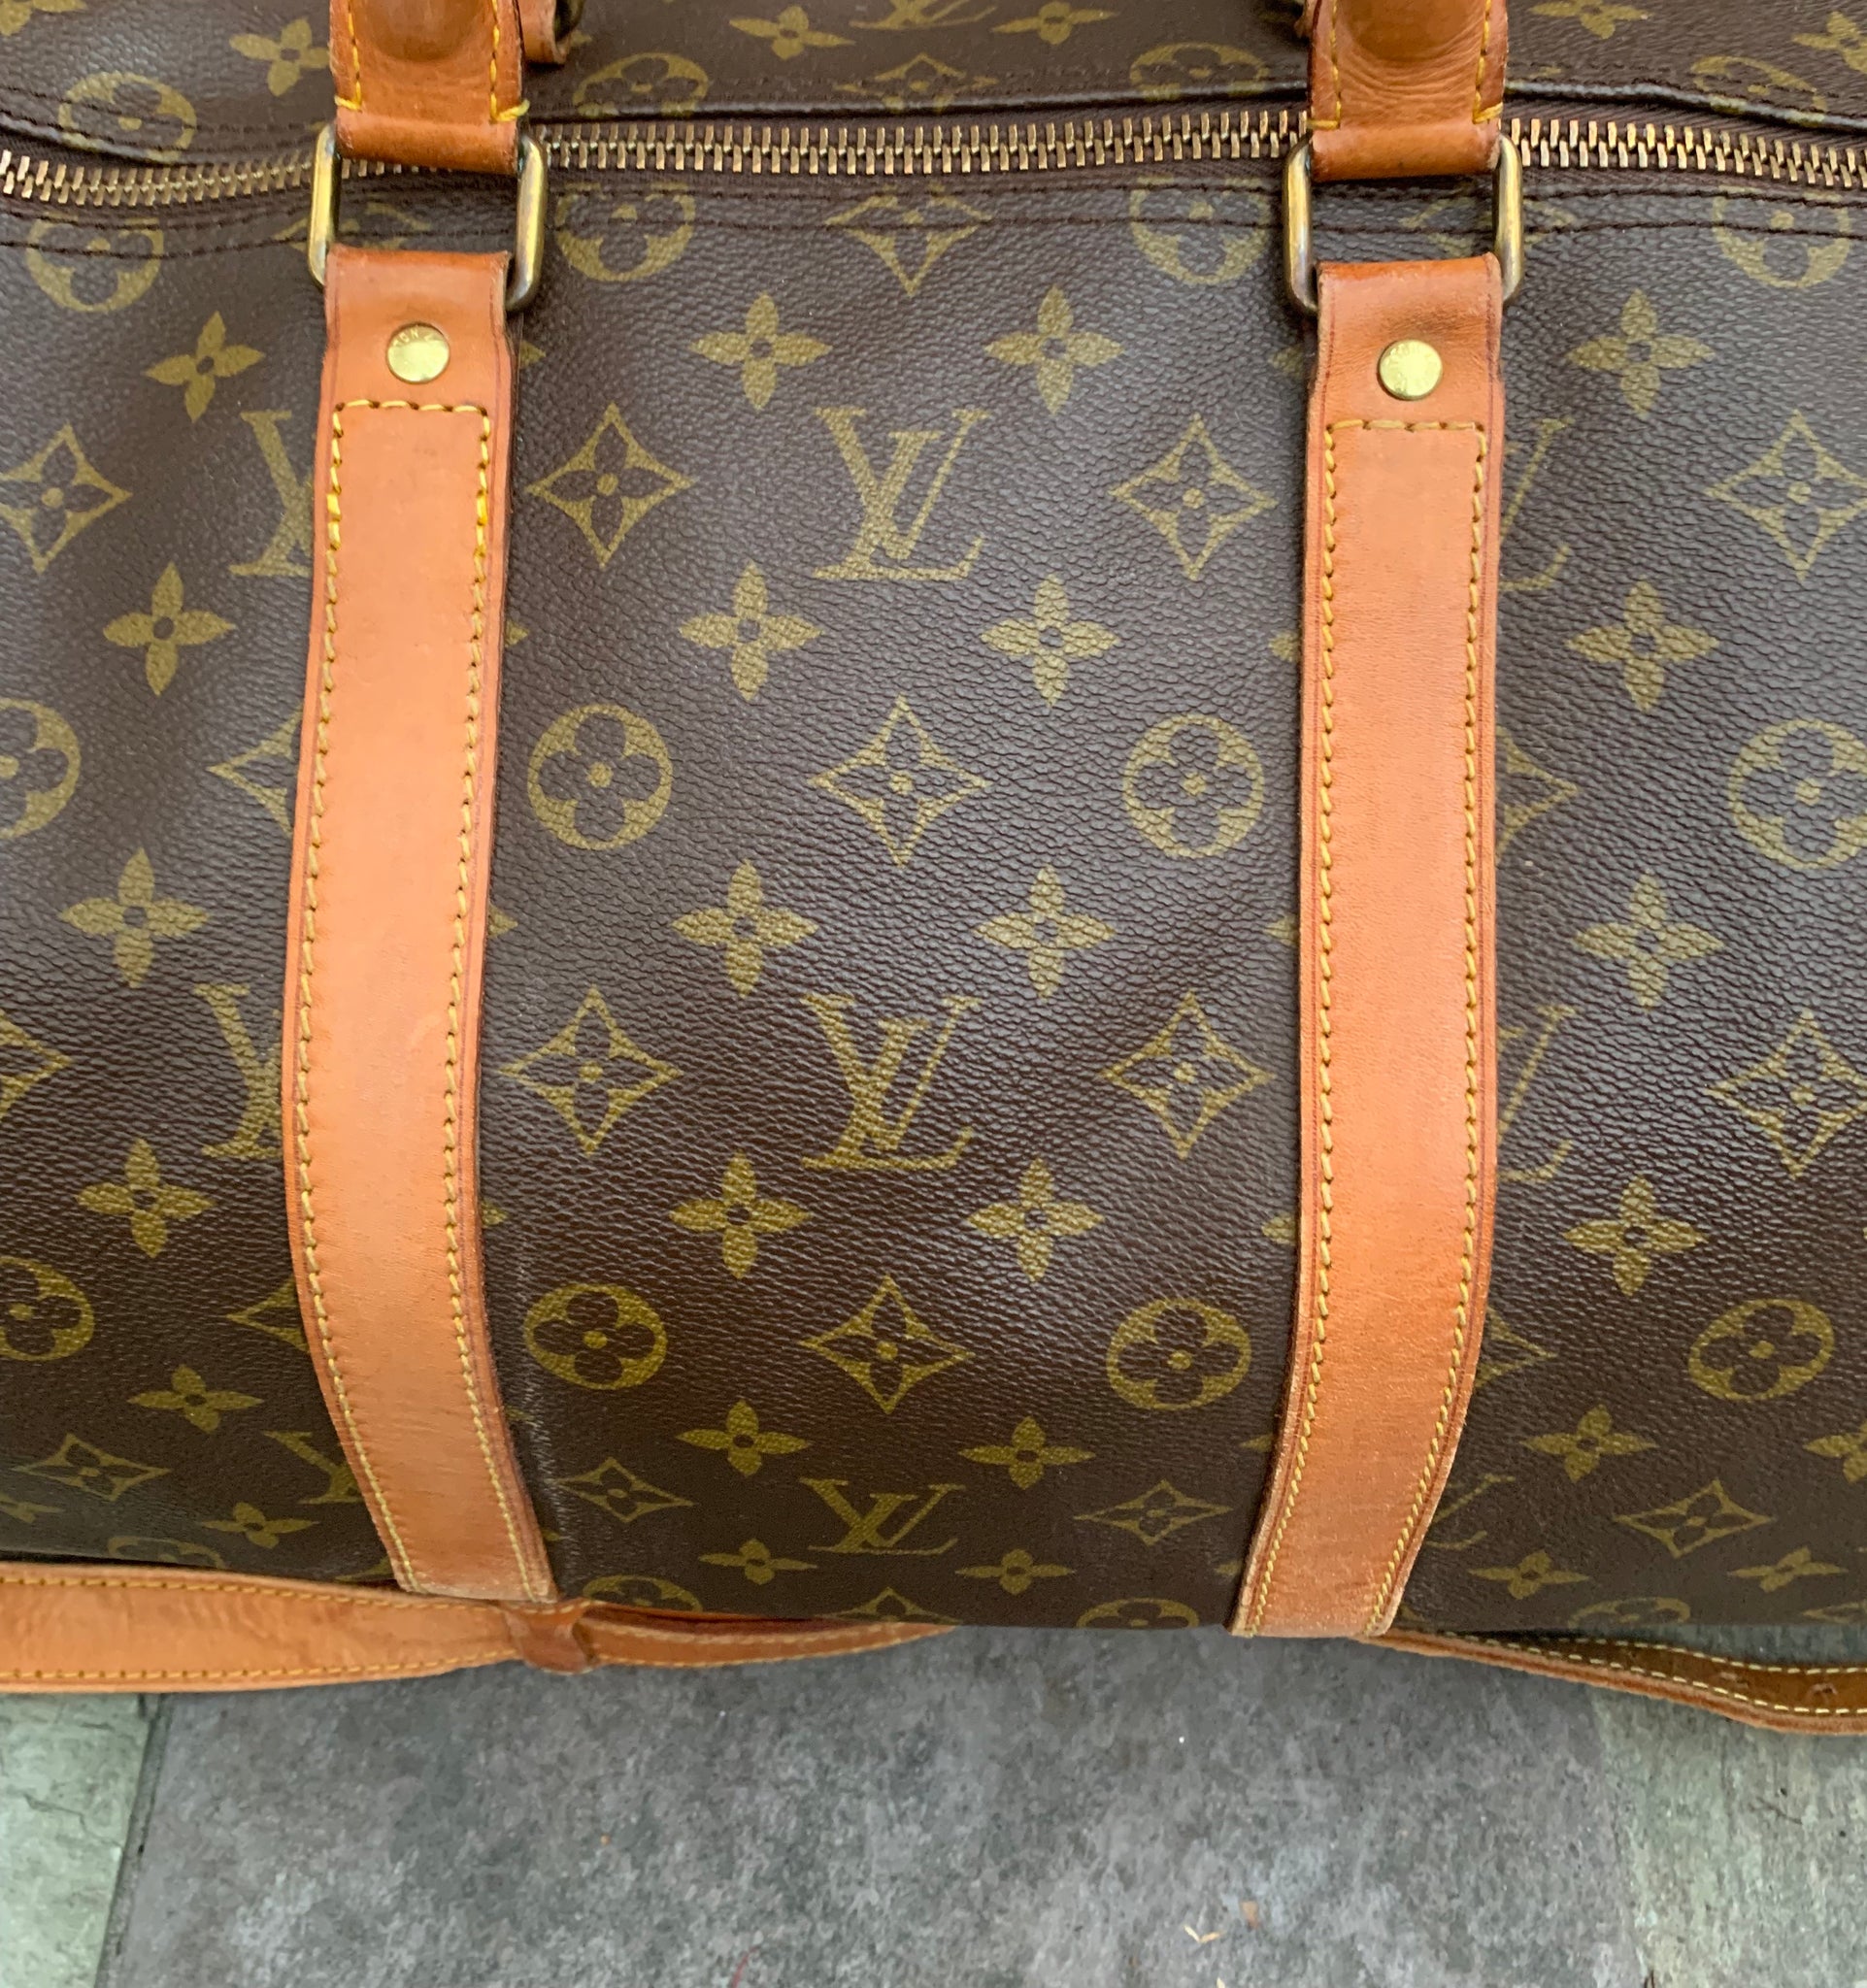 Louis Vuitton Keepall Travel bag 387576